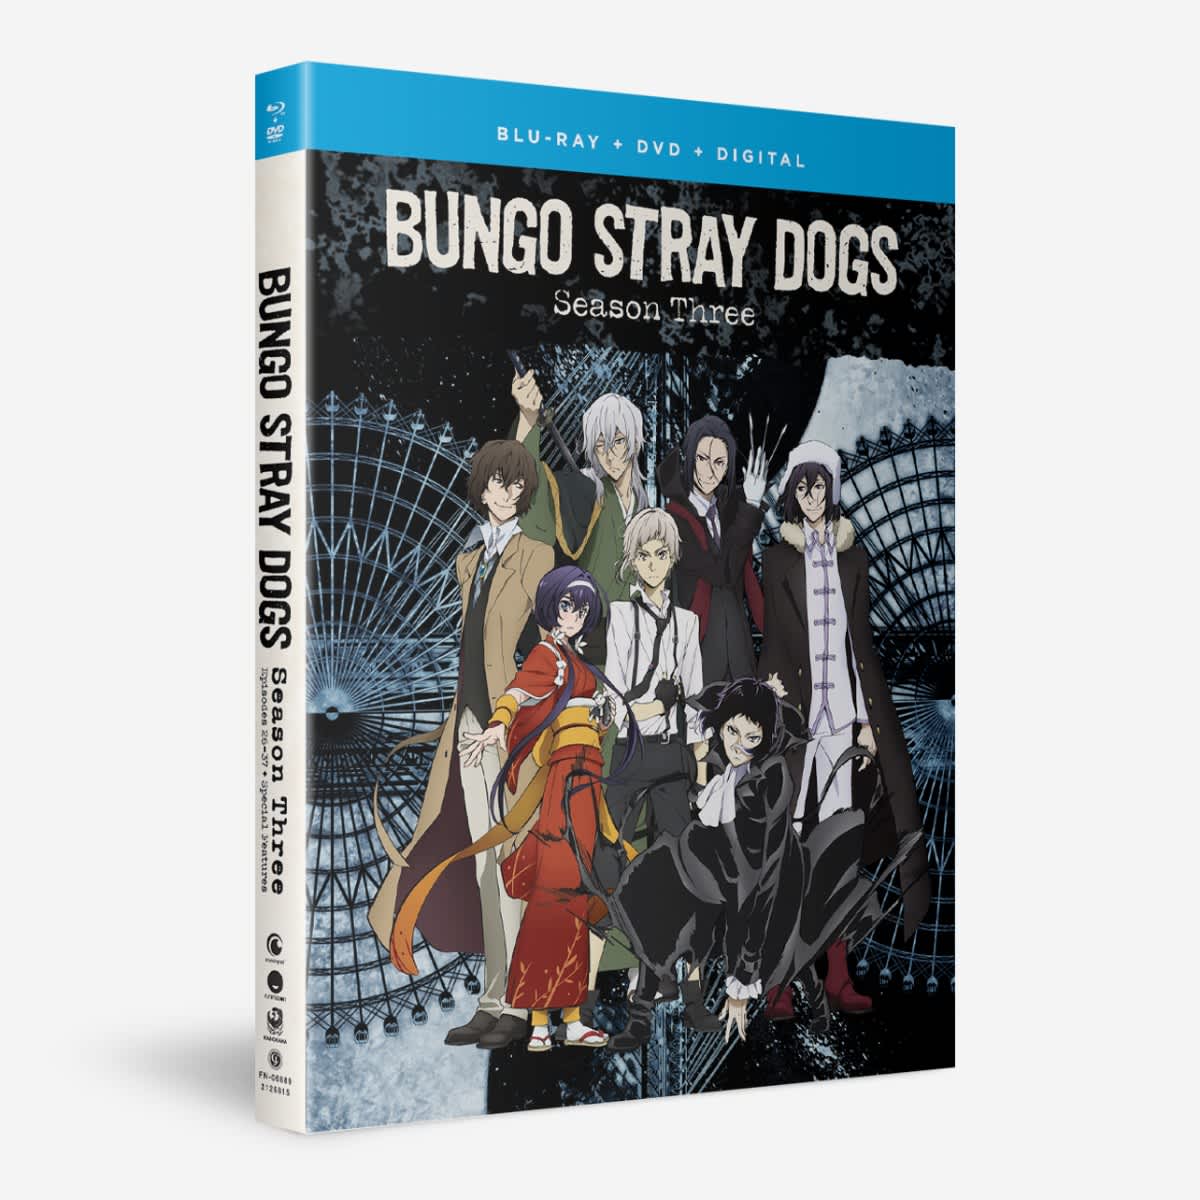 704400068898_anime-bungo-stray-dogs-season-3-blu-ray-dvd-primary.jpg